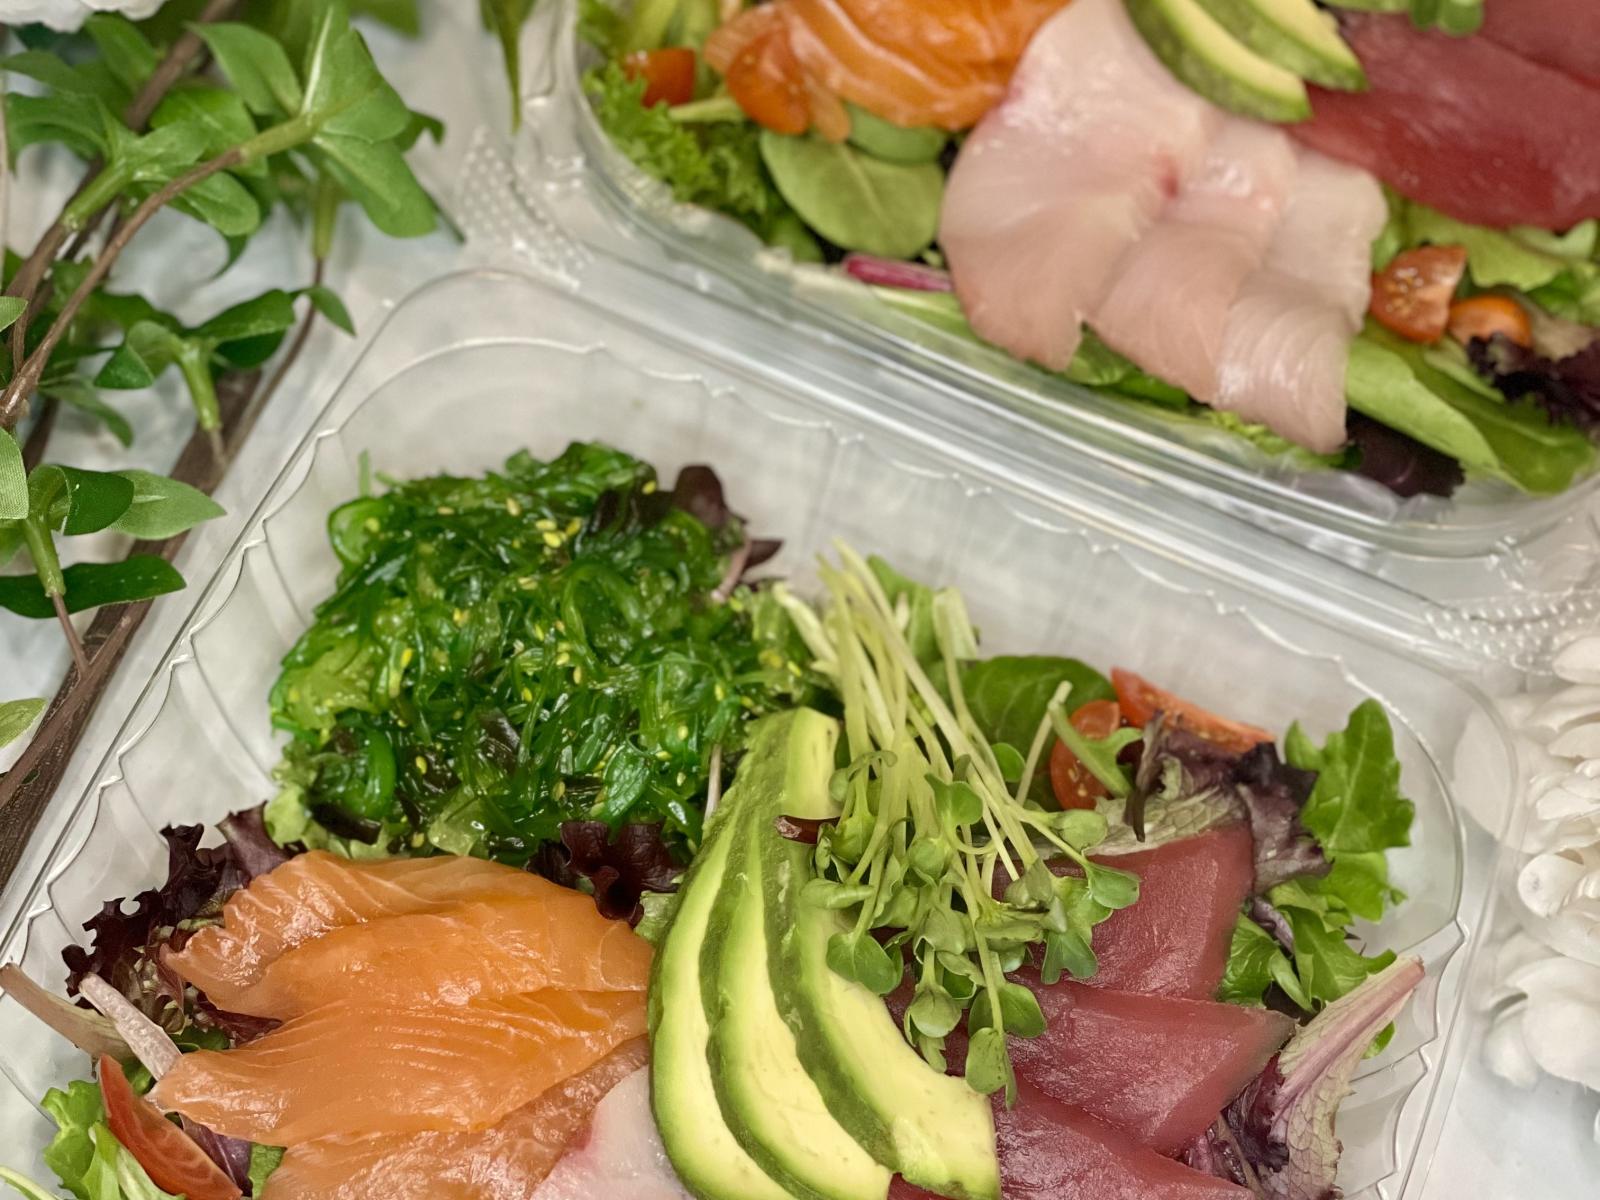 Main image for offer titled Sashimi Salad